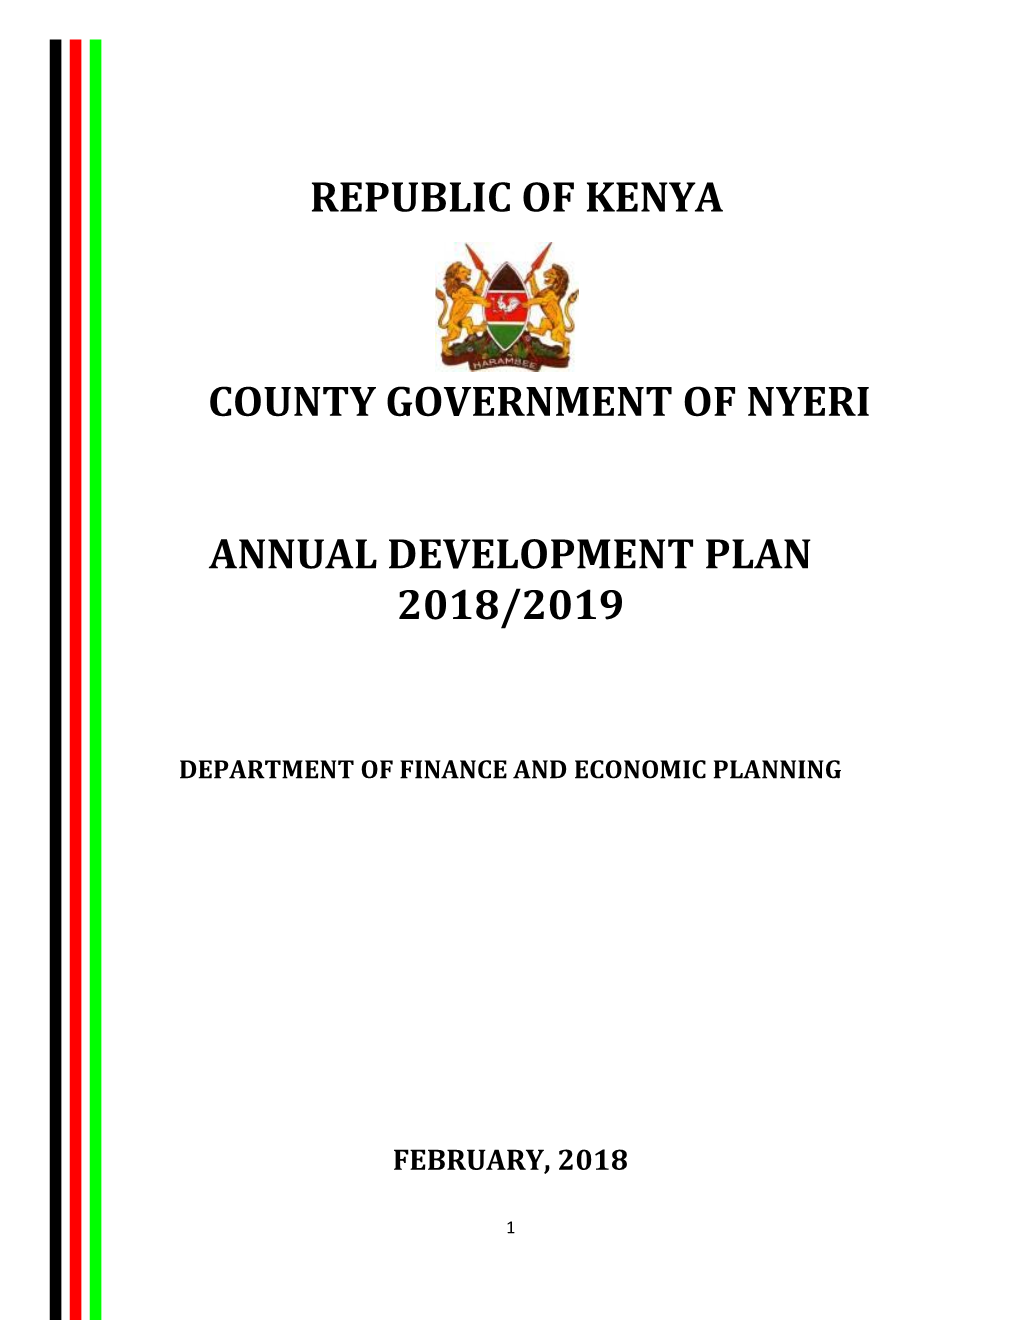 Republic of Kenya County Government of Nyeri